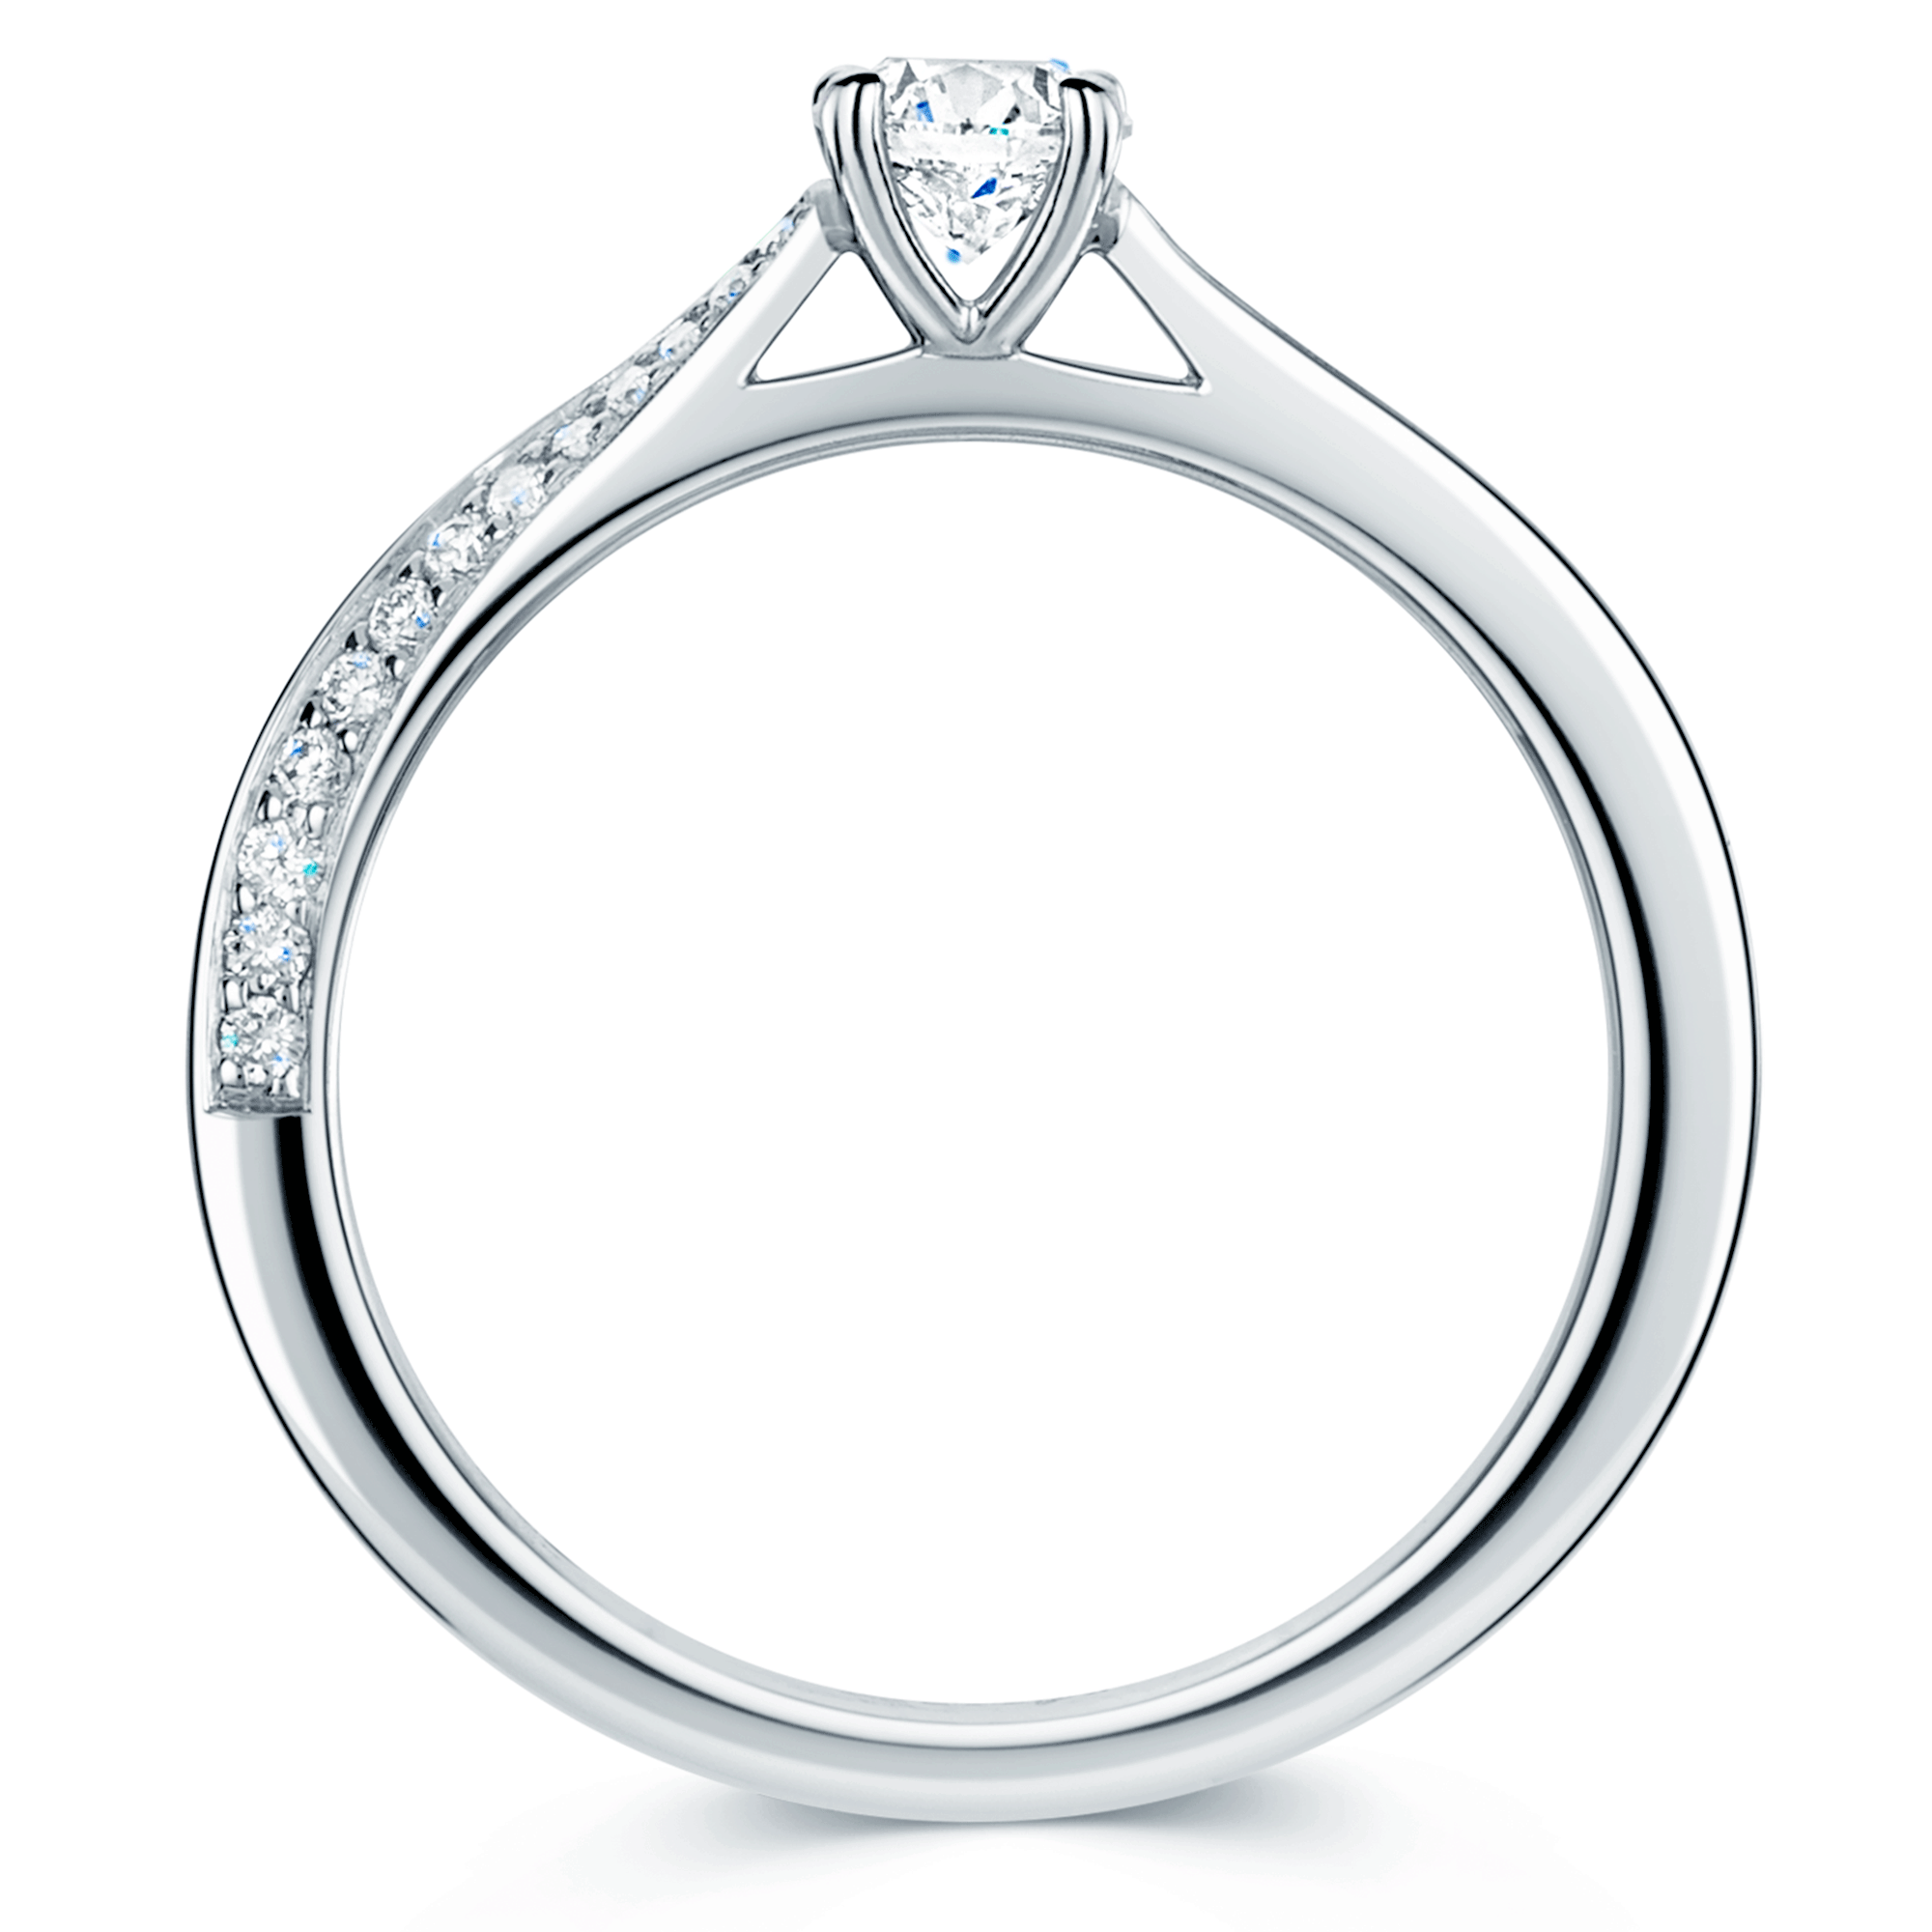 Platinum Round Brilliant Cut Diamond Ring With Diamond Set Shoulders